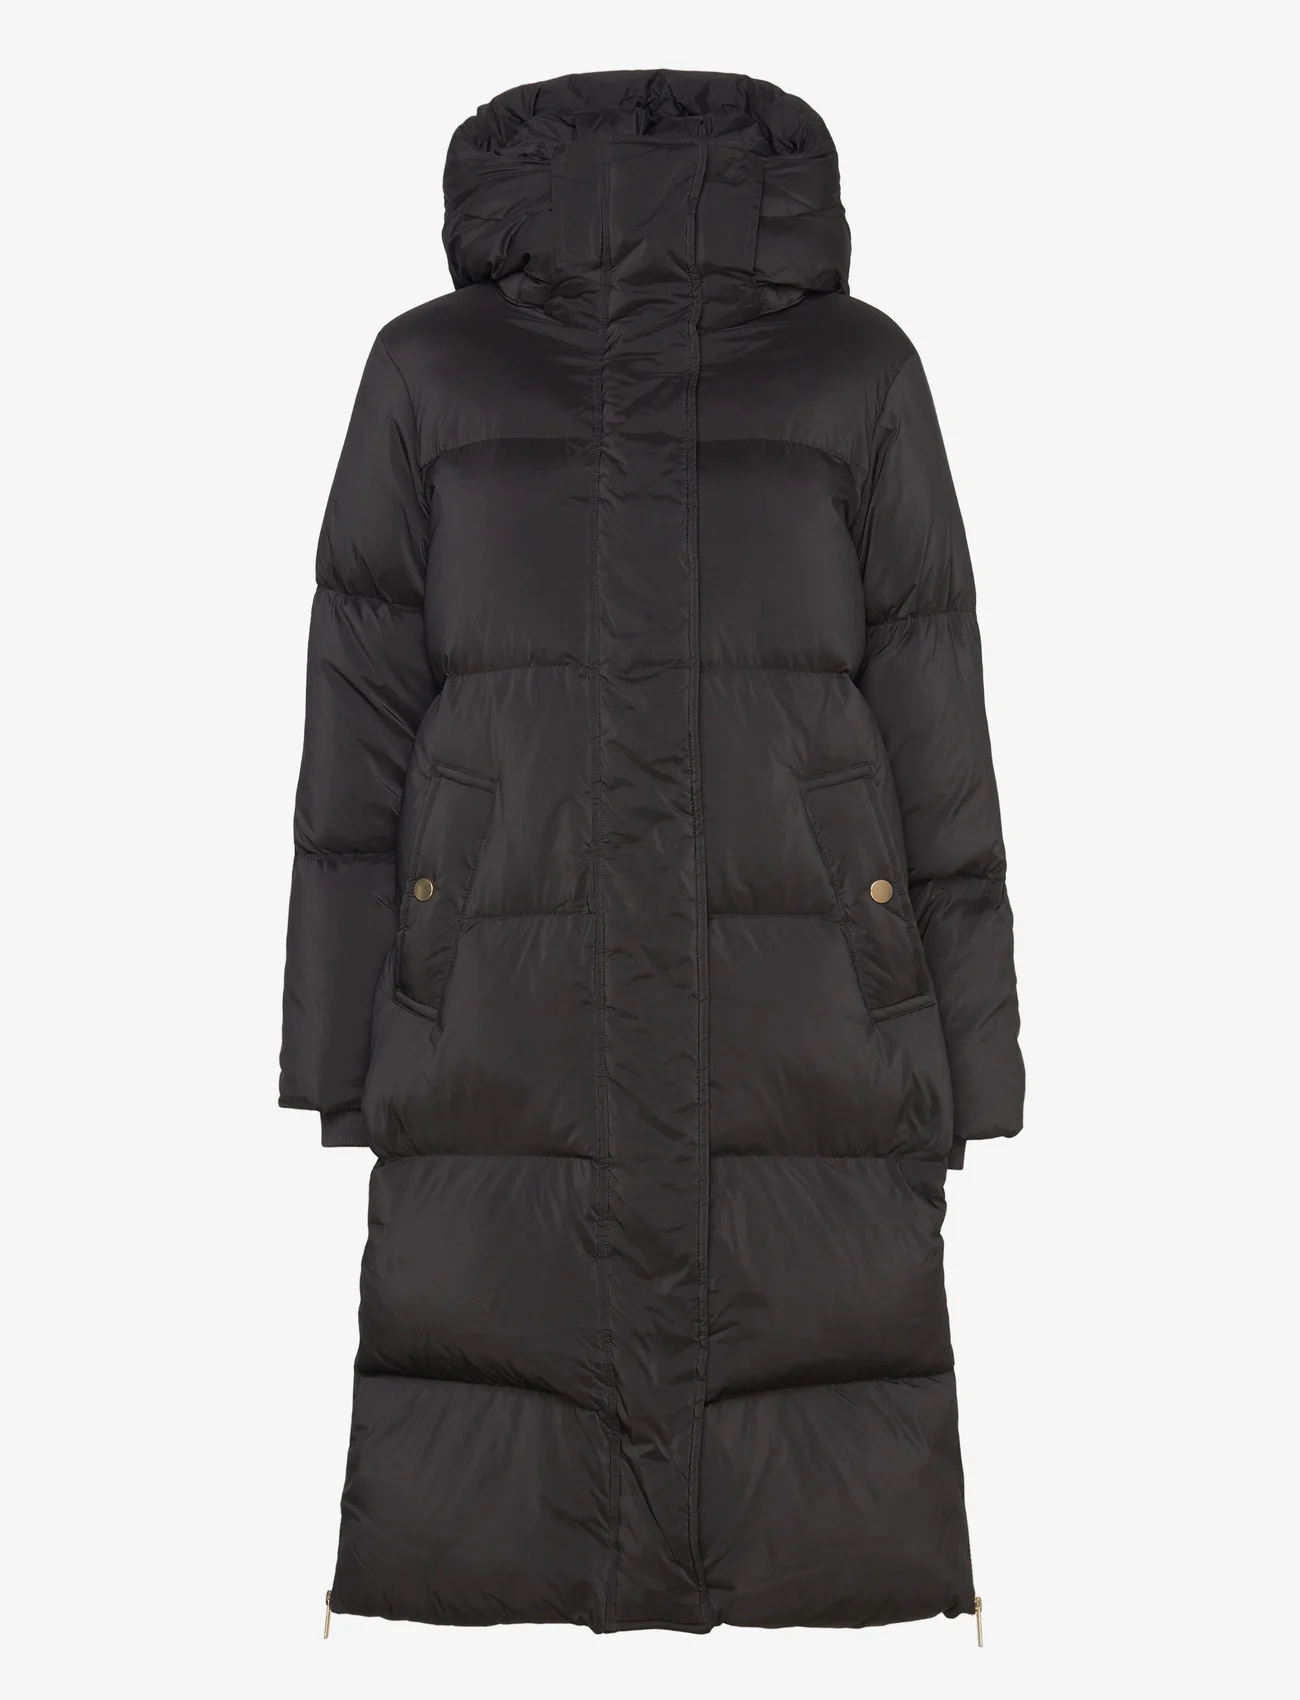 Part Two - StormaPW OTW - winter jackets - black - 0